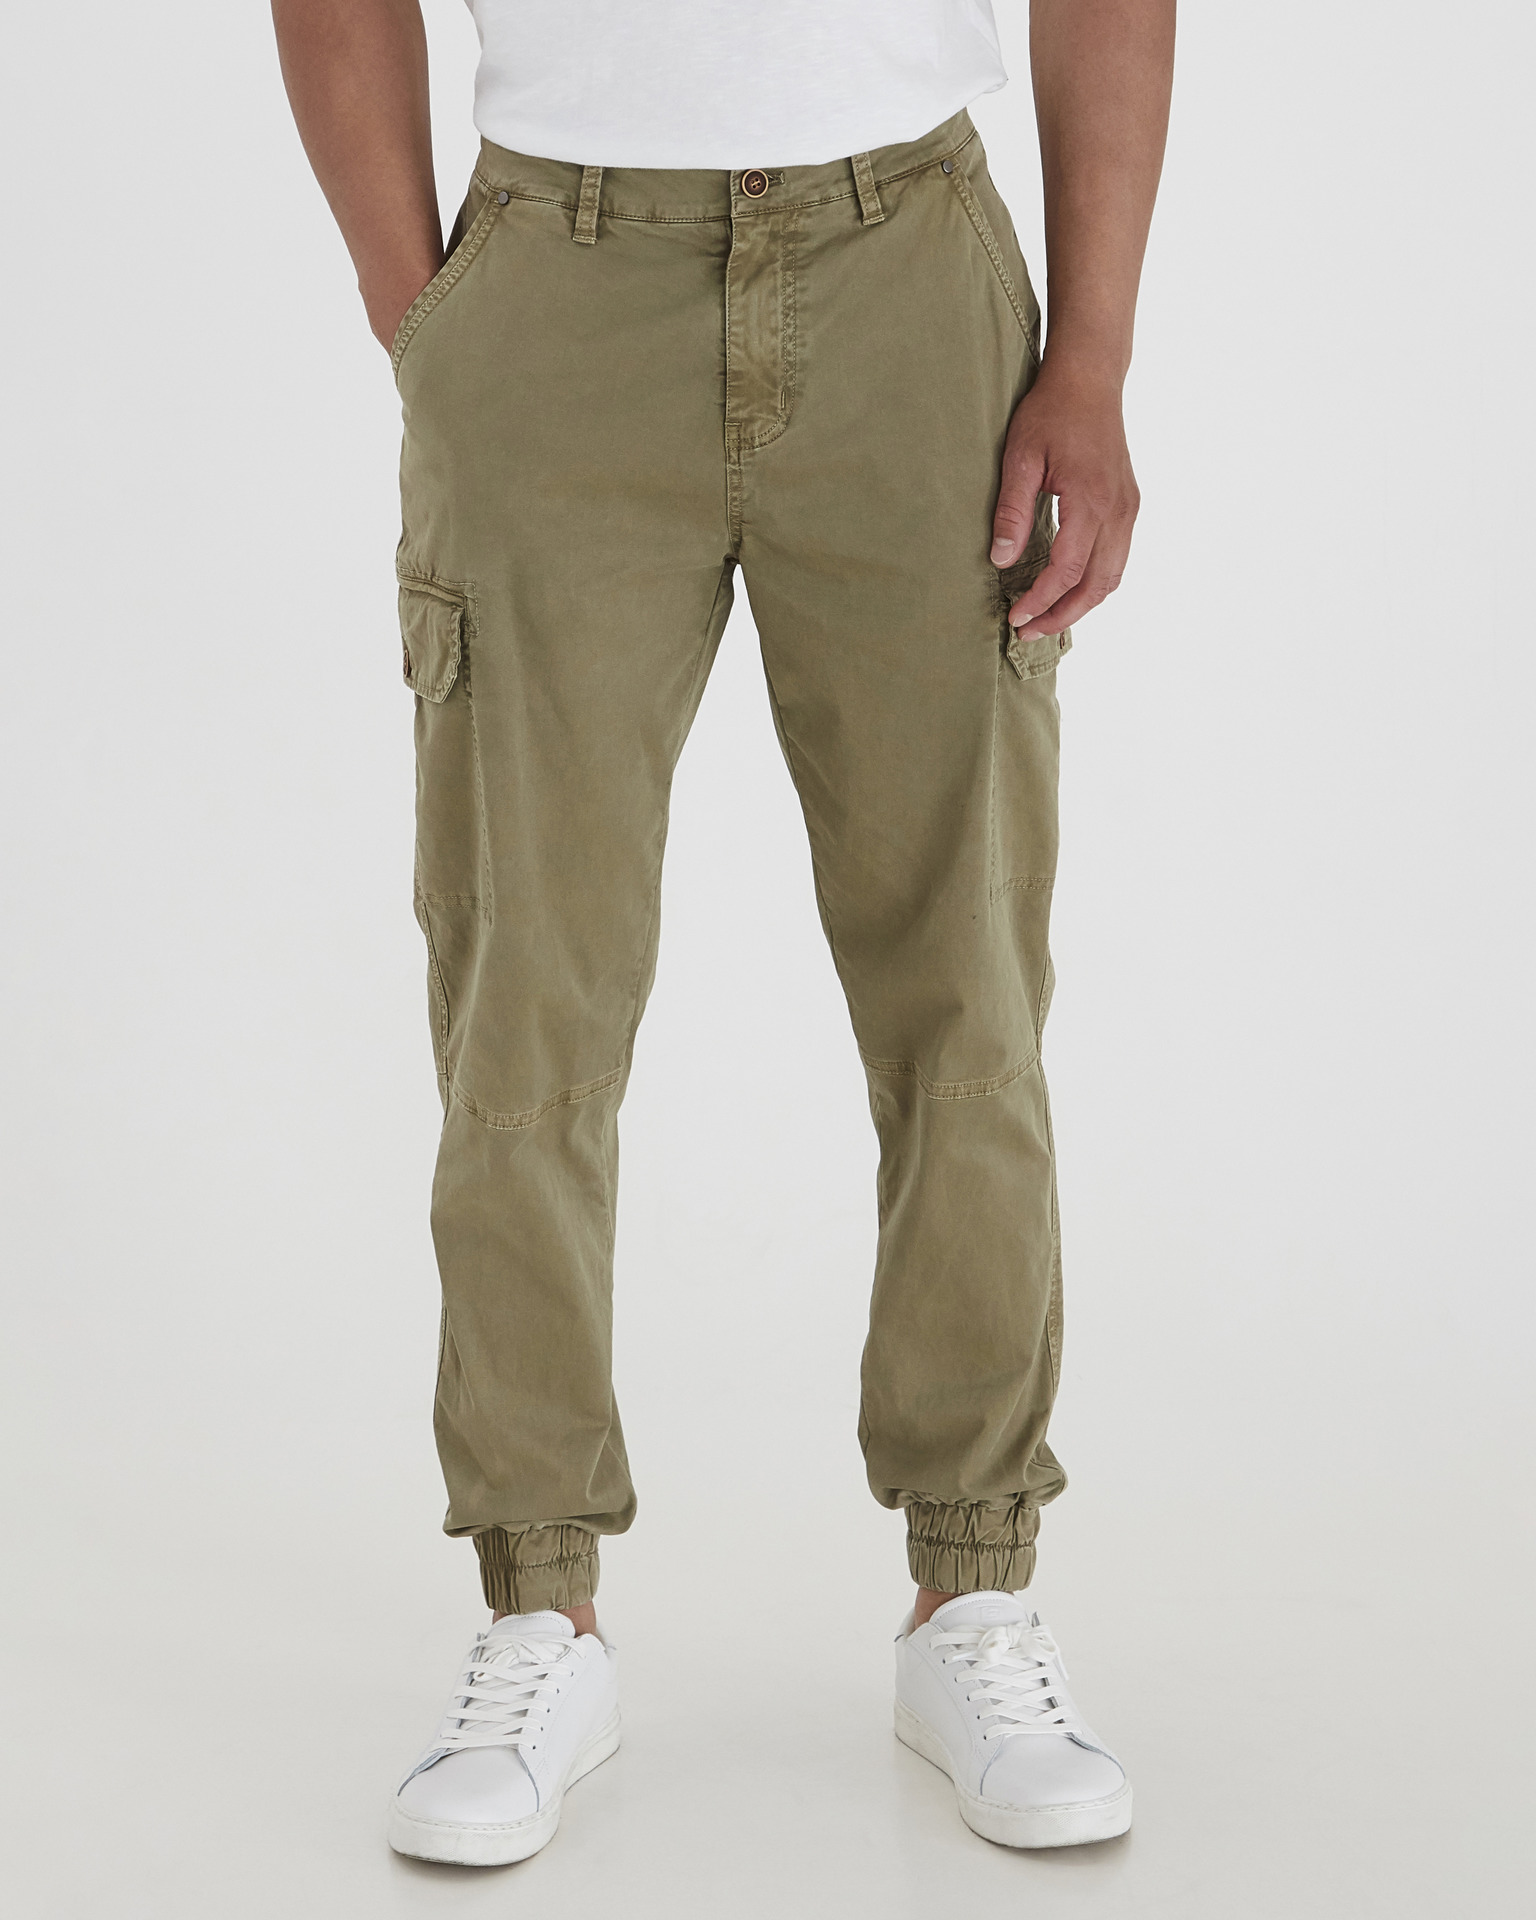 Fotografie Khaki kalhoty s kapsami Blend - XS (29/32)